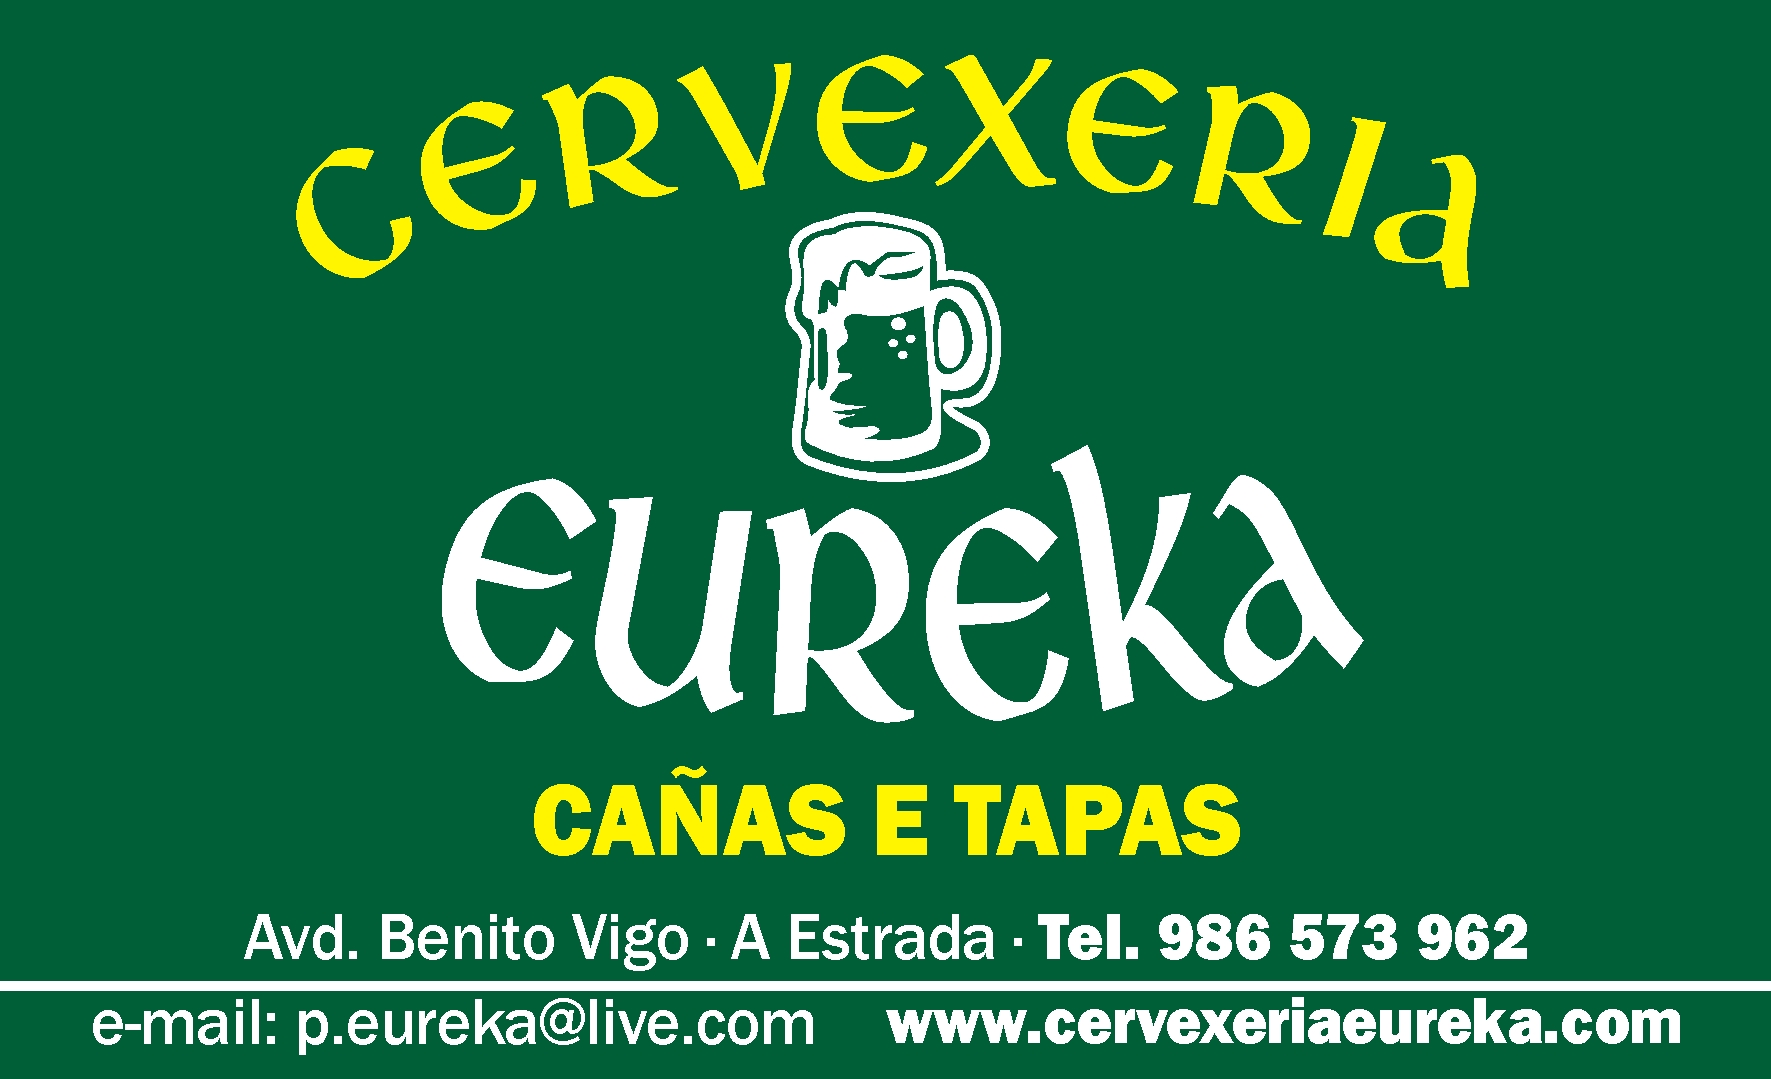 Cervexera Eureka